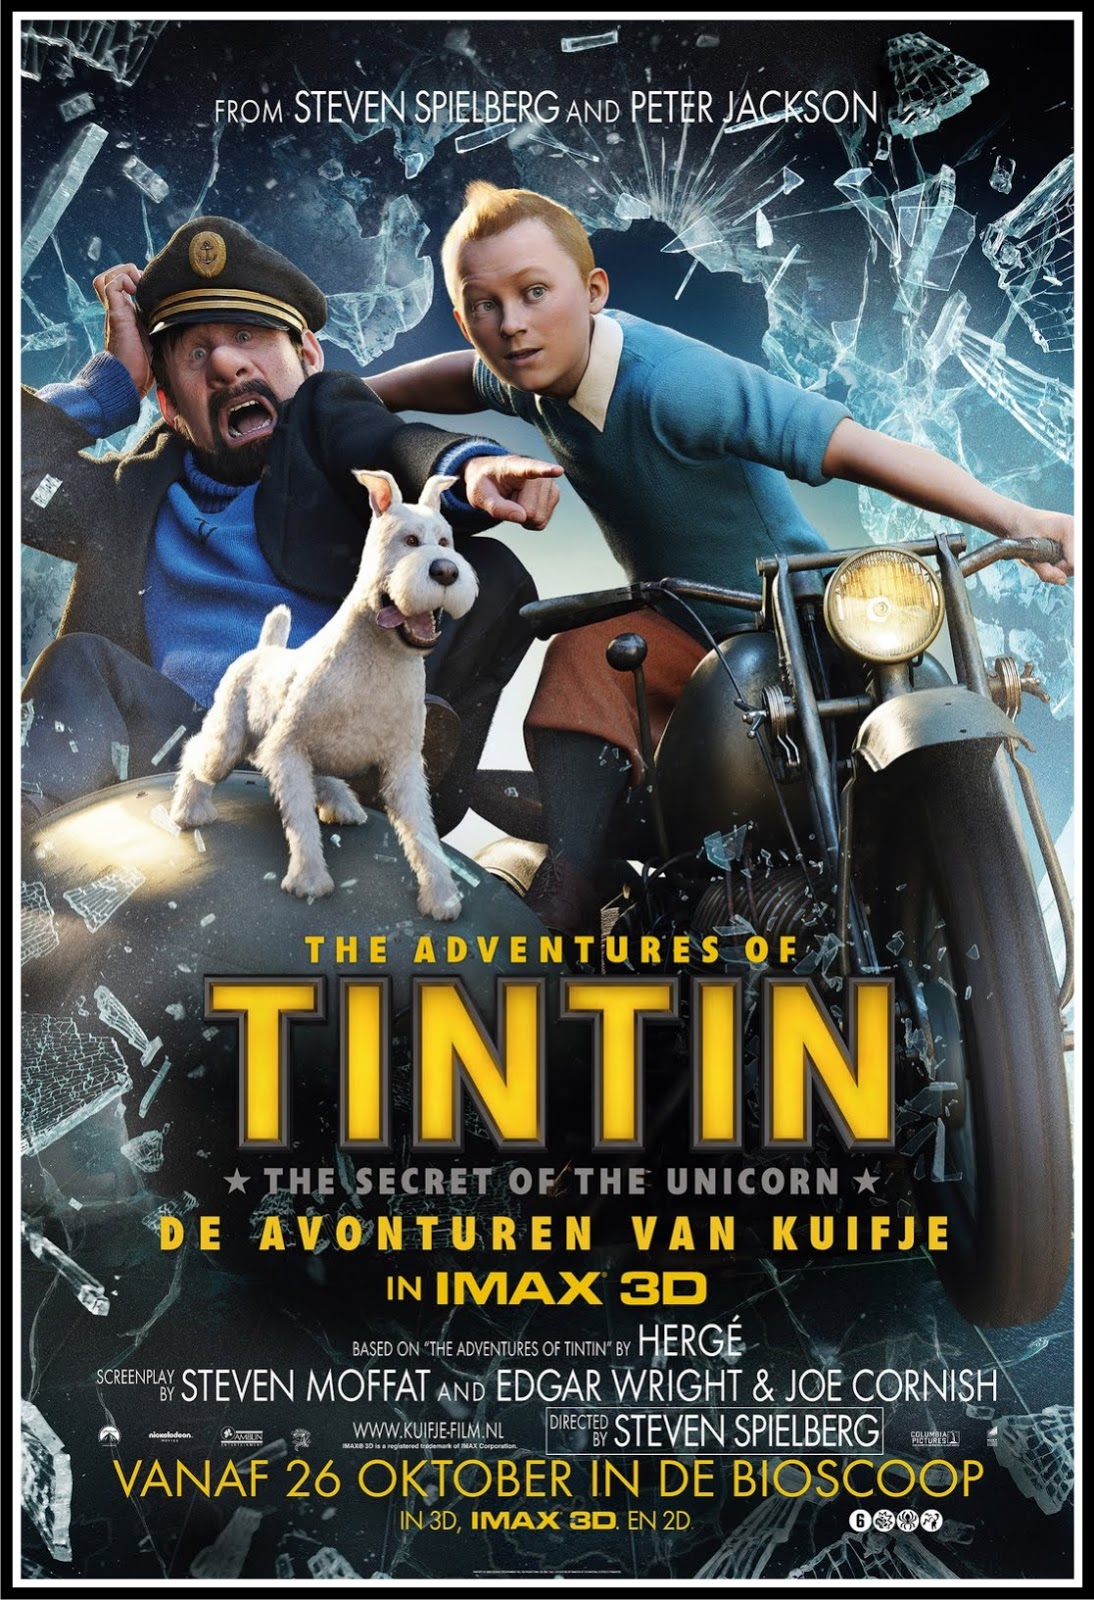 Тин тин фотографии. Приключения Тинтина: тайна единорога (2011). Приключения Тинтина тайна единорога 2011 Постер.